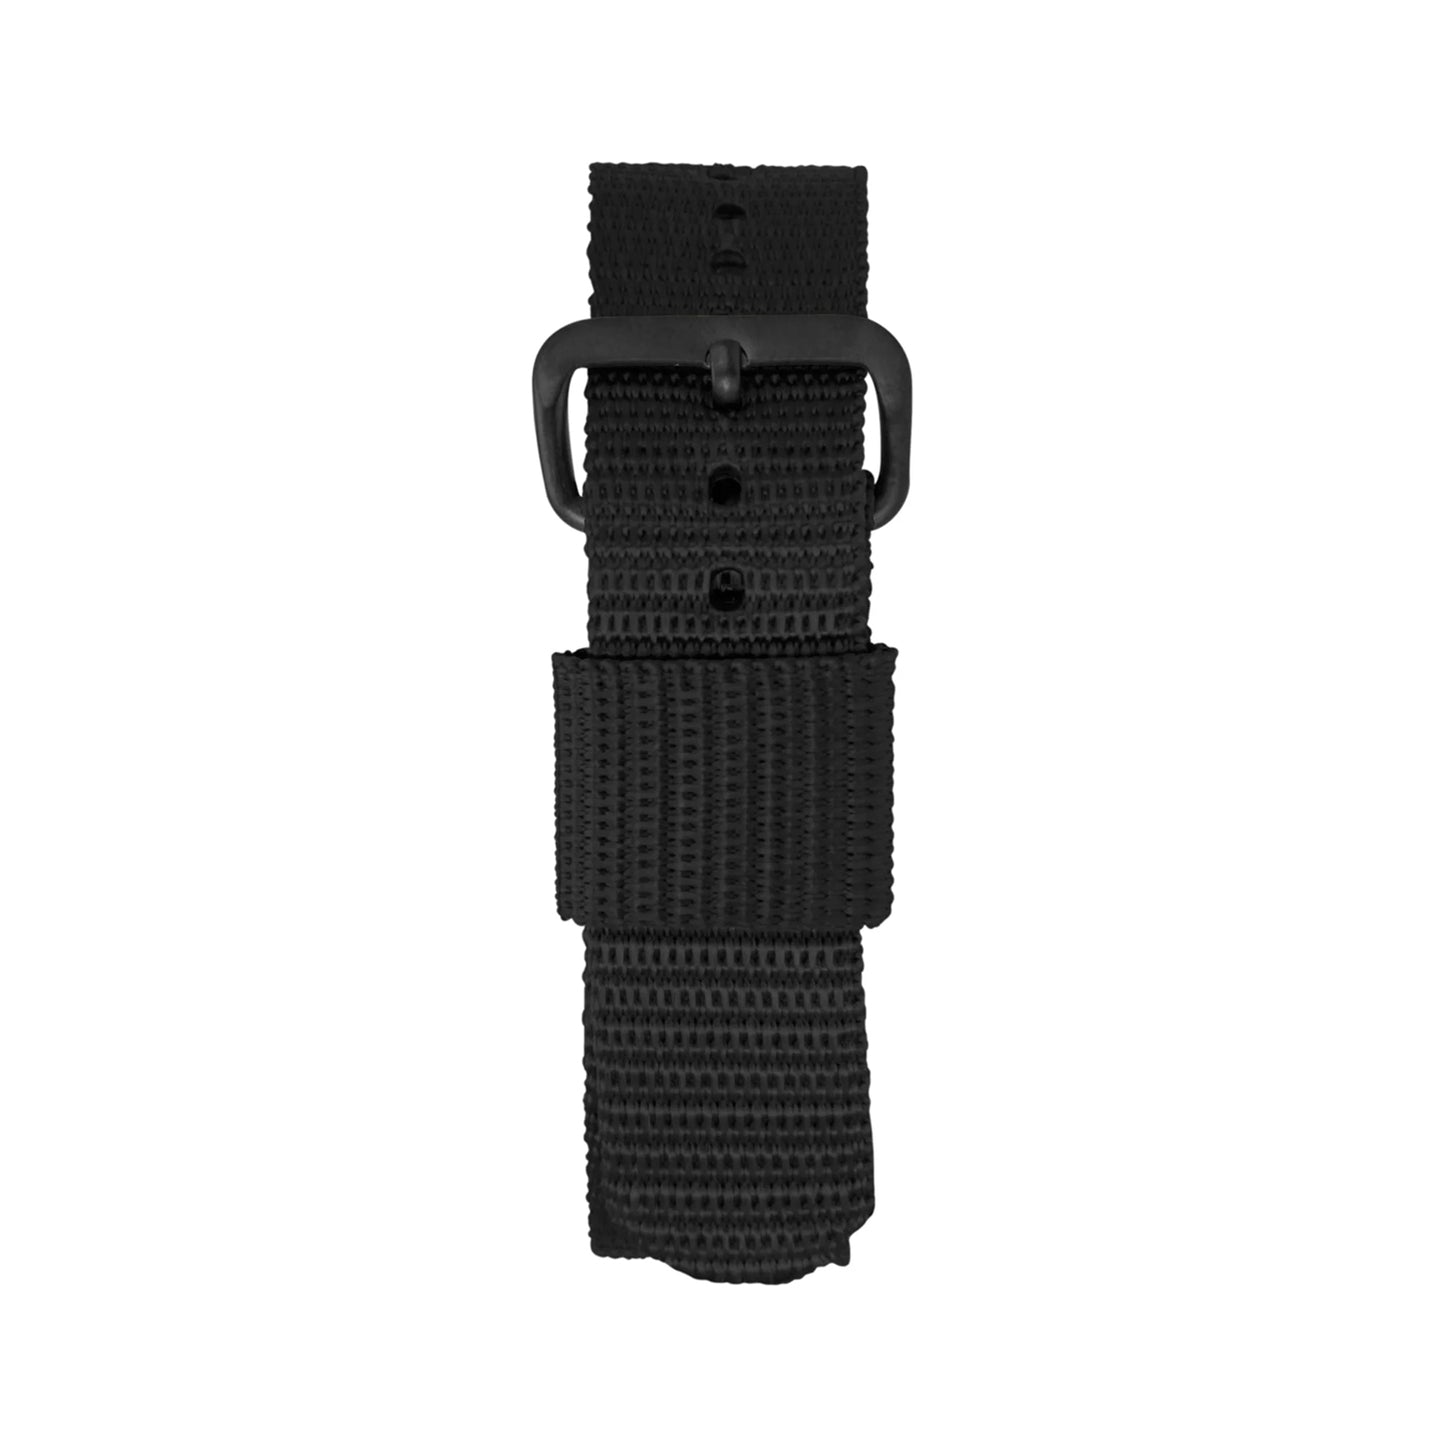 Marathon 16mm Ballistic Nylon Watch Band/Strap with Stainless Steel Buckle